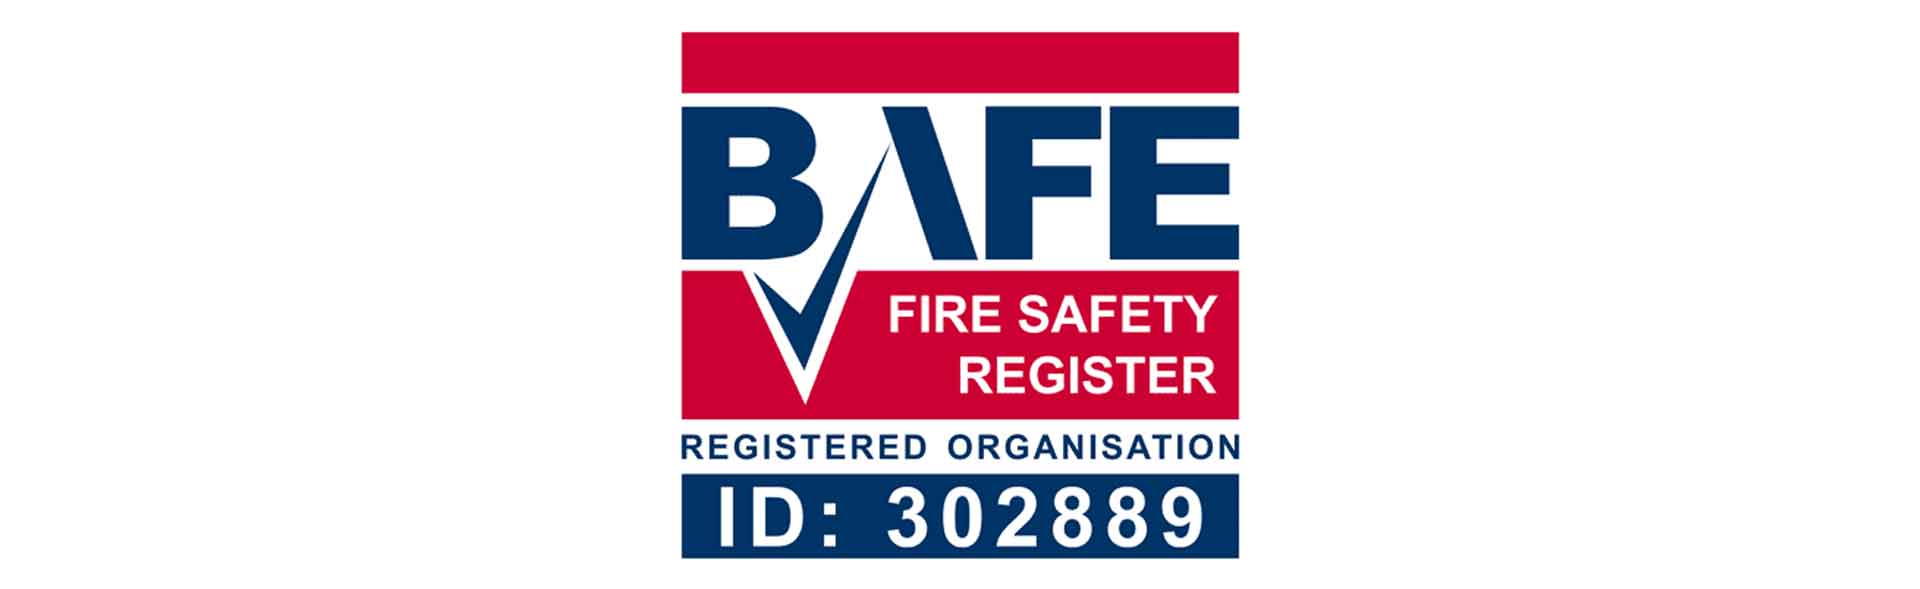 Bafe Fire Alarm Systems